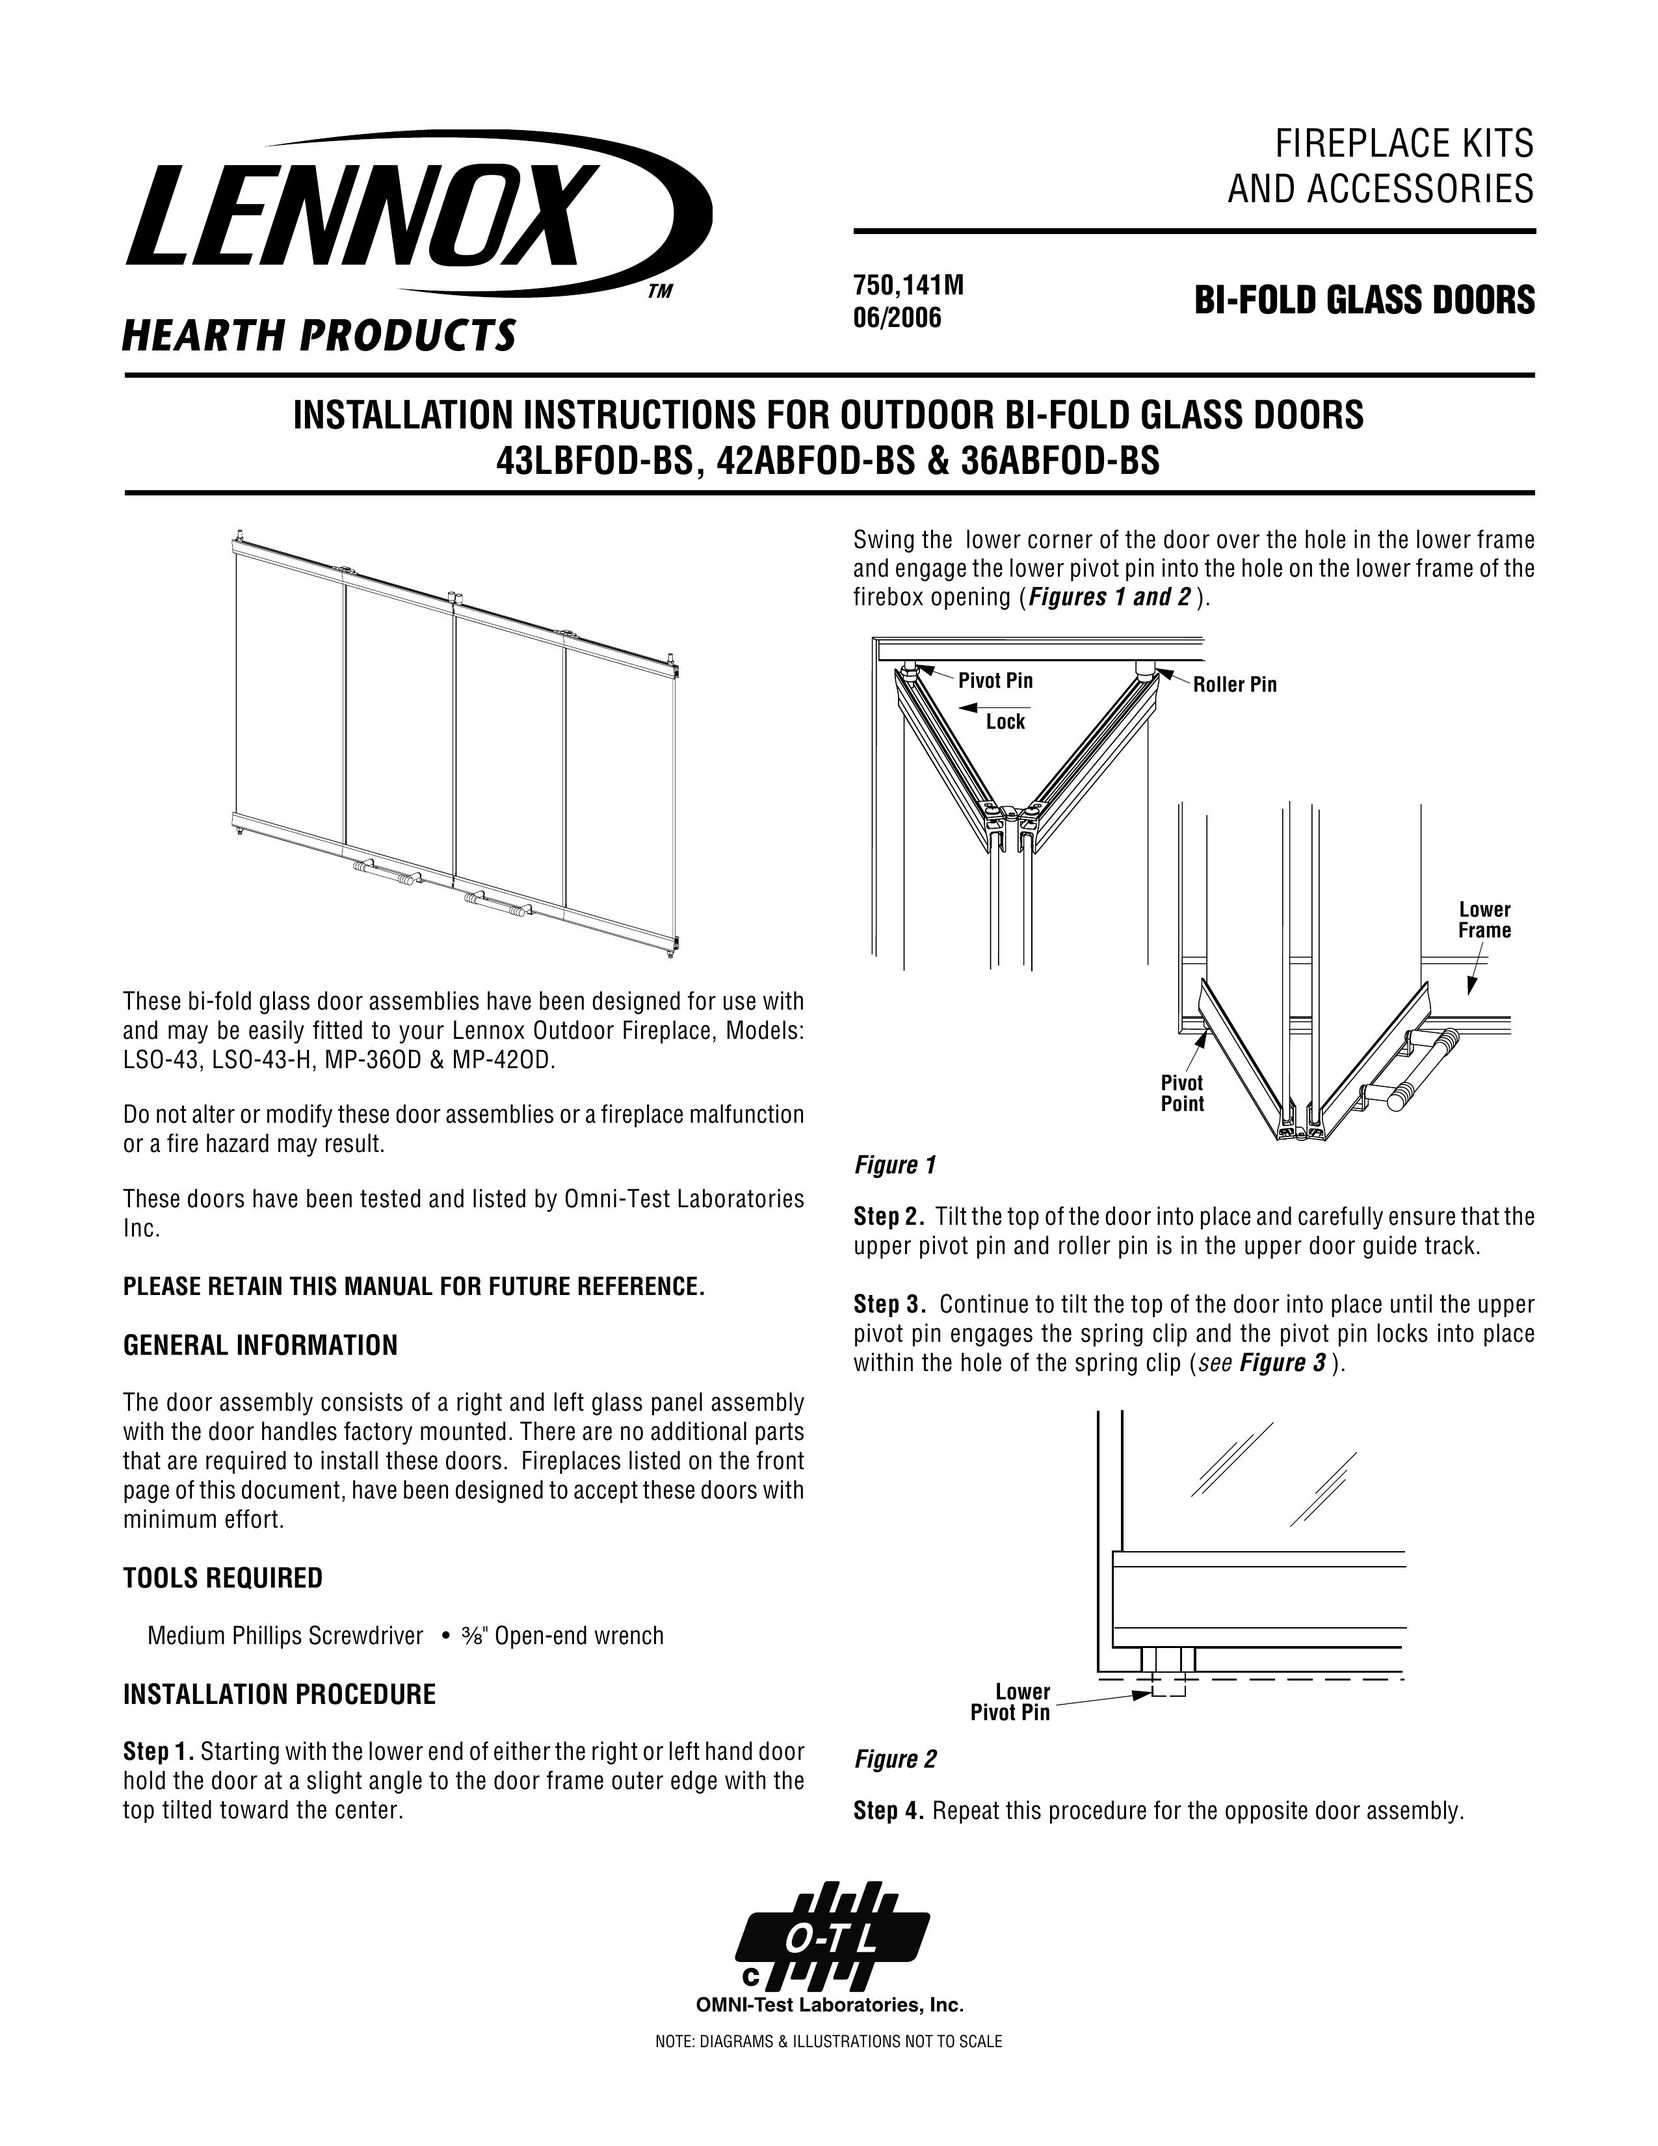 Lennox Hearth MP-42OD Door User Manual